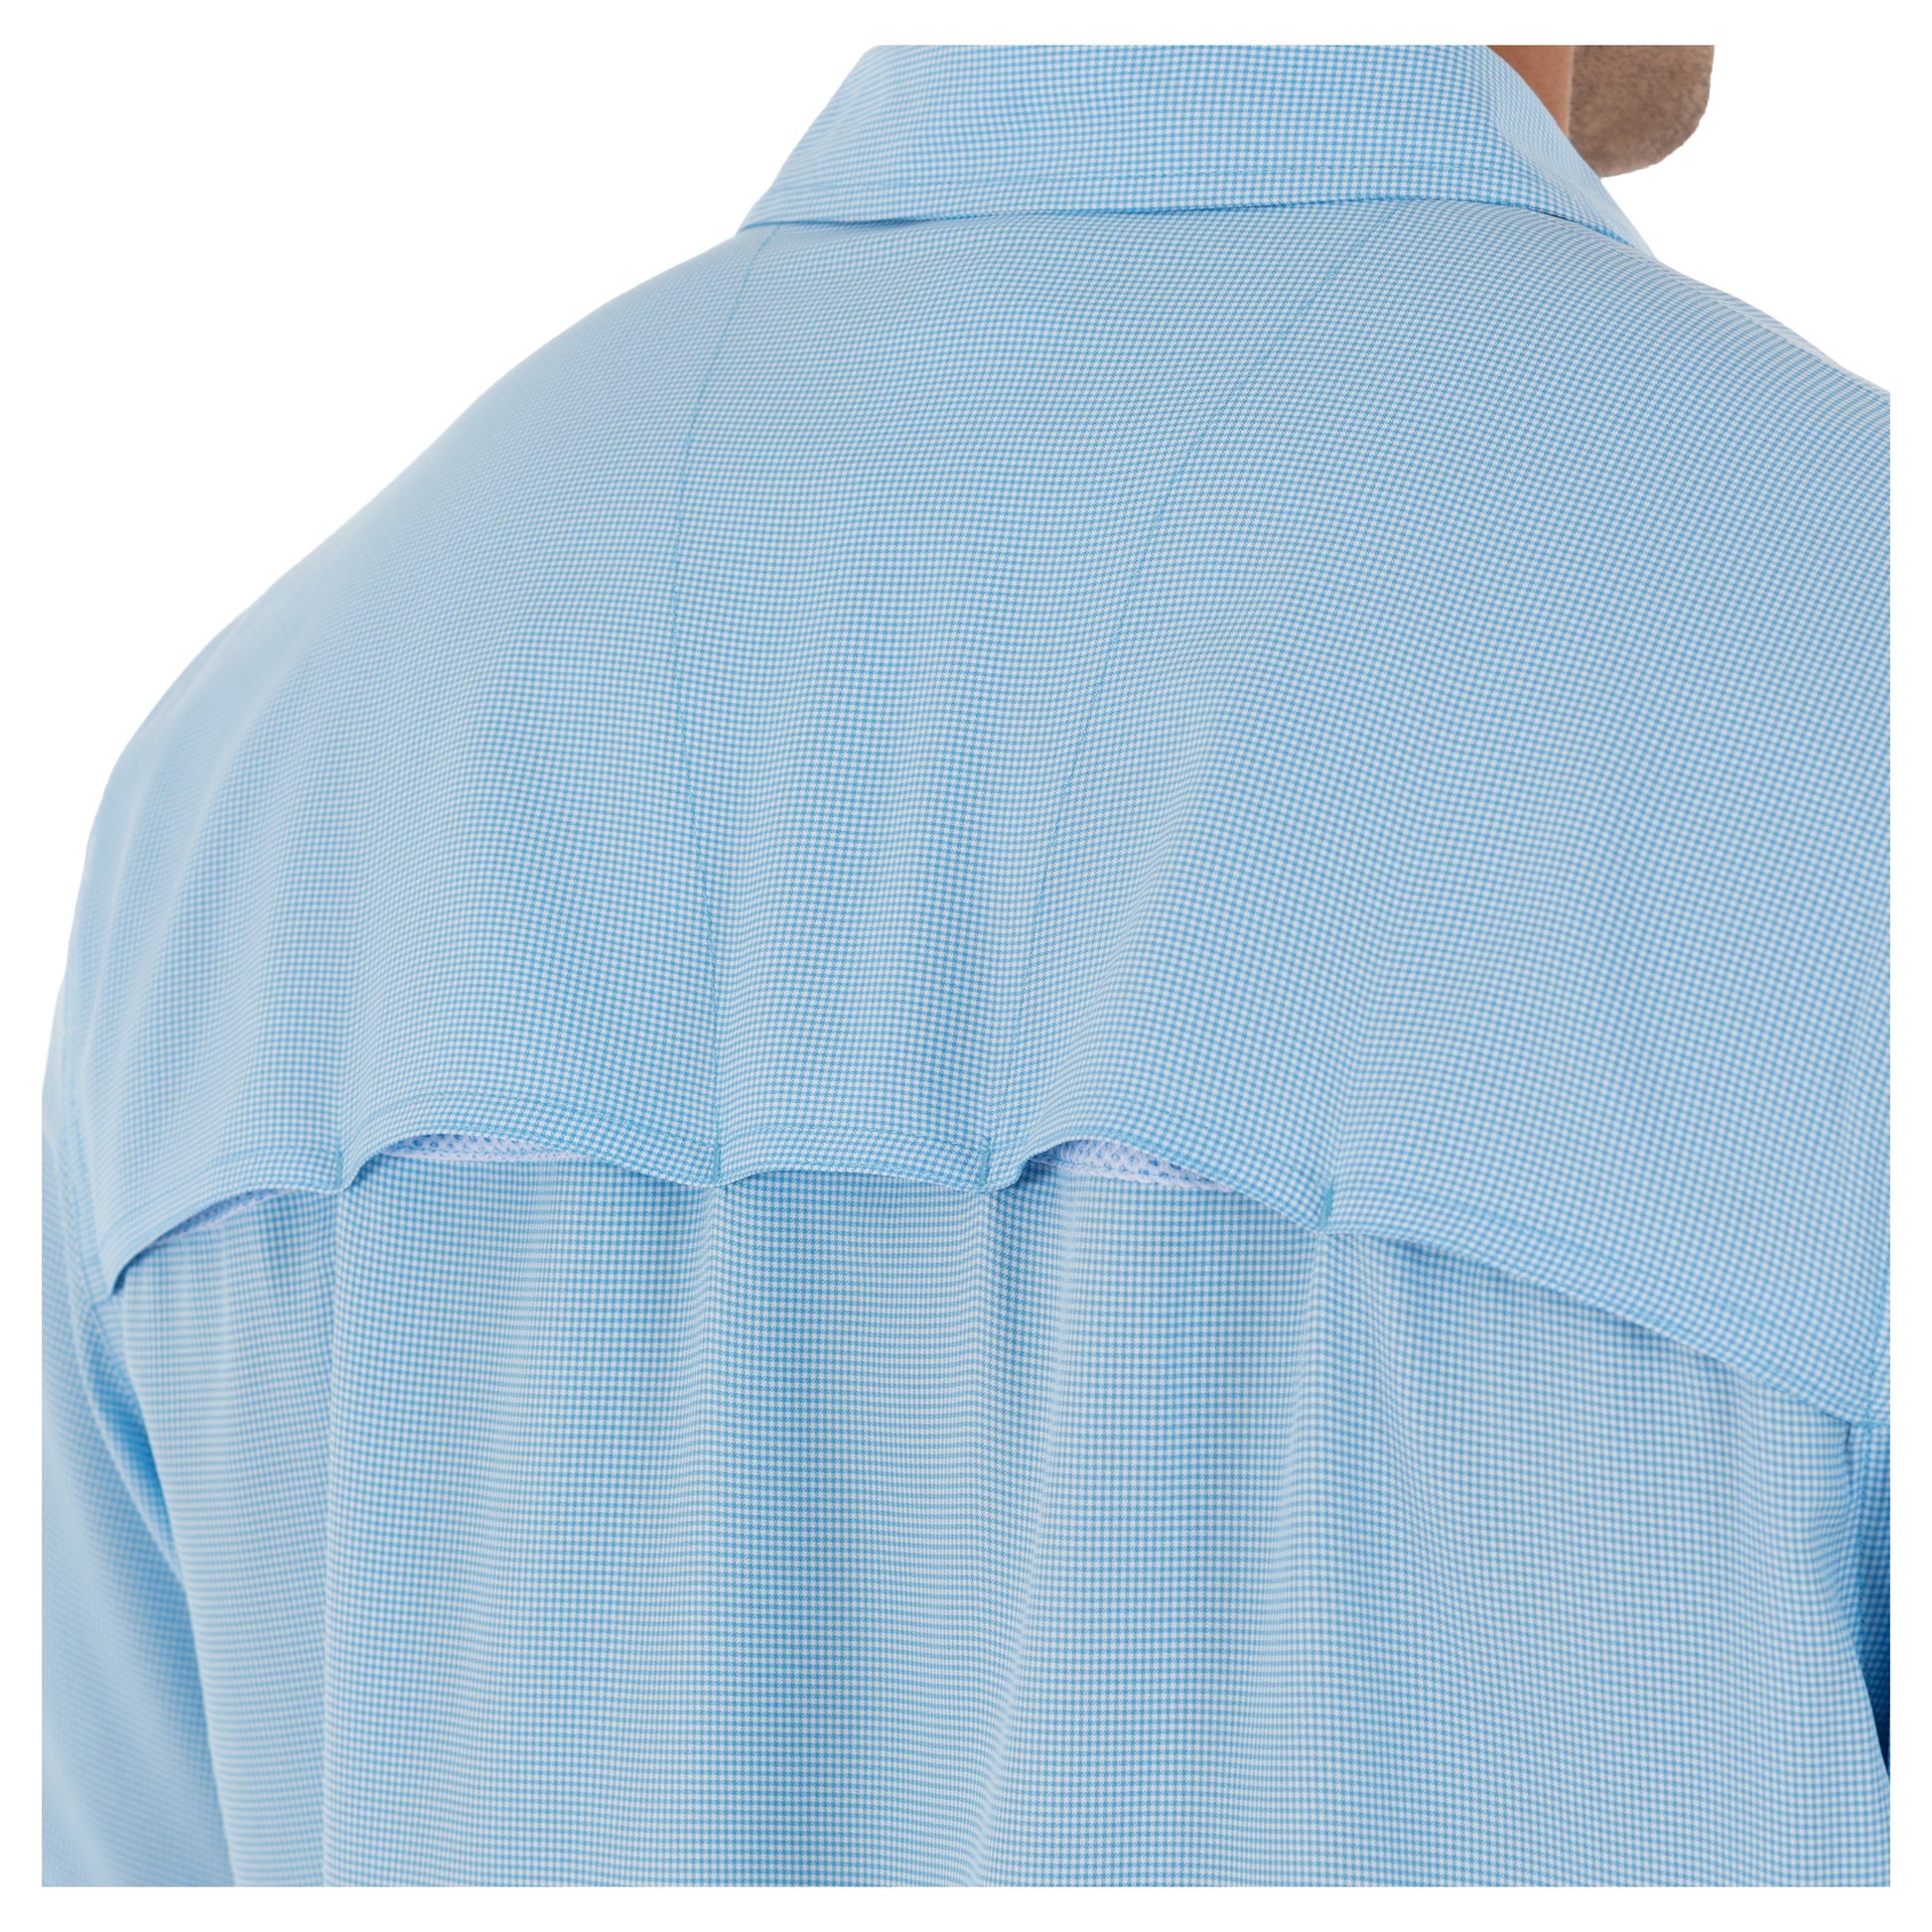 Men's Short Sleeve Texture Gingham Blue Performance Fishing Shirt View 2